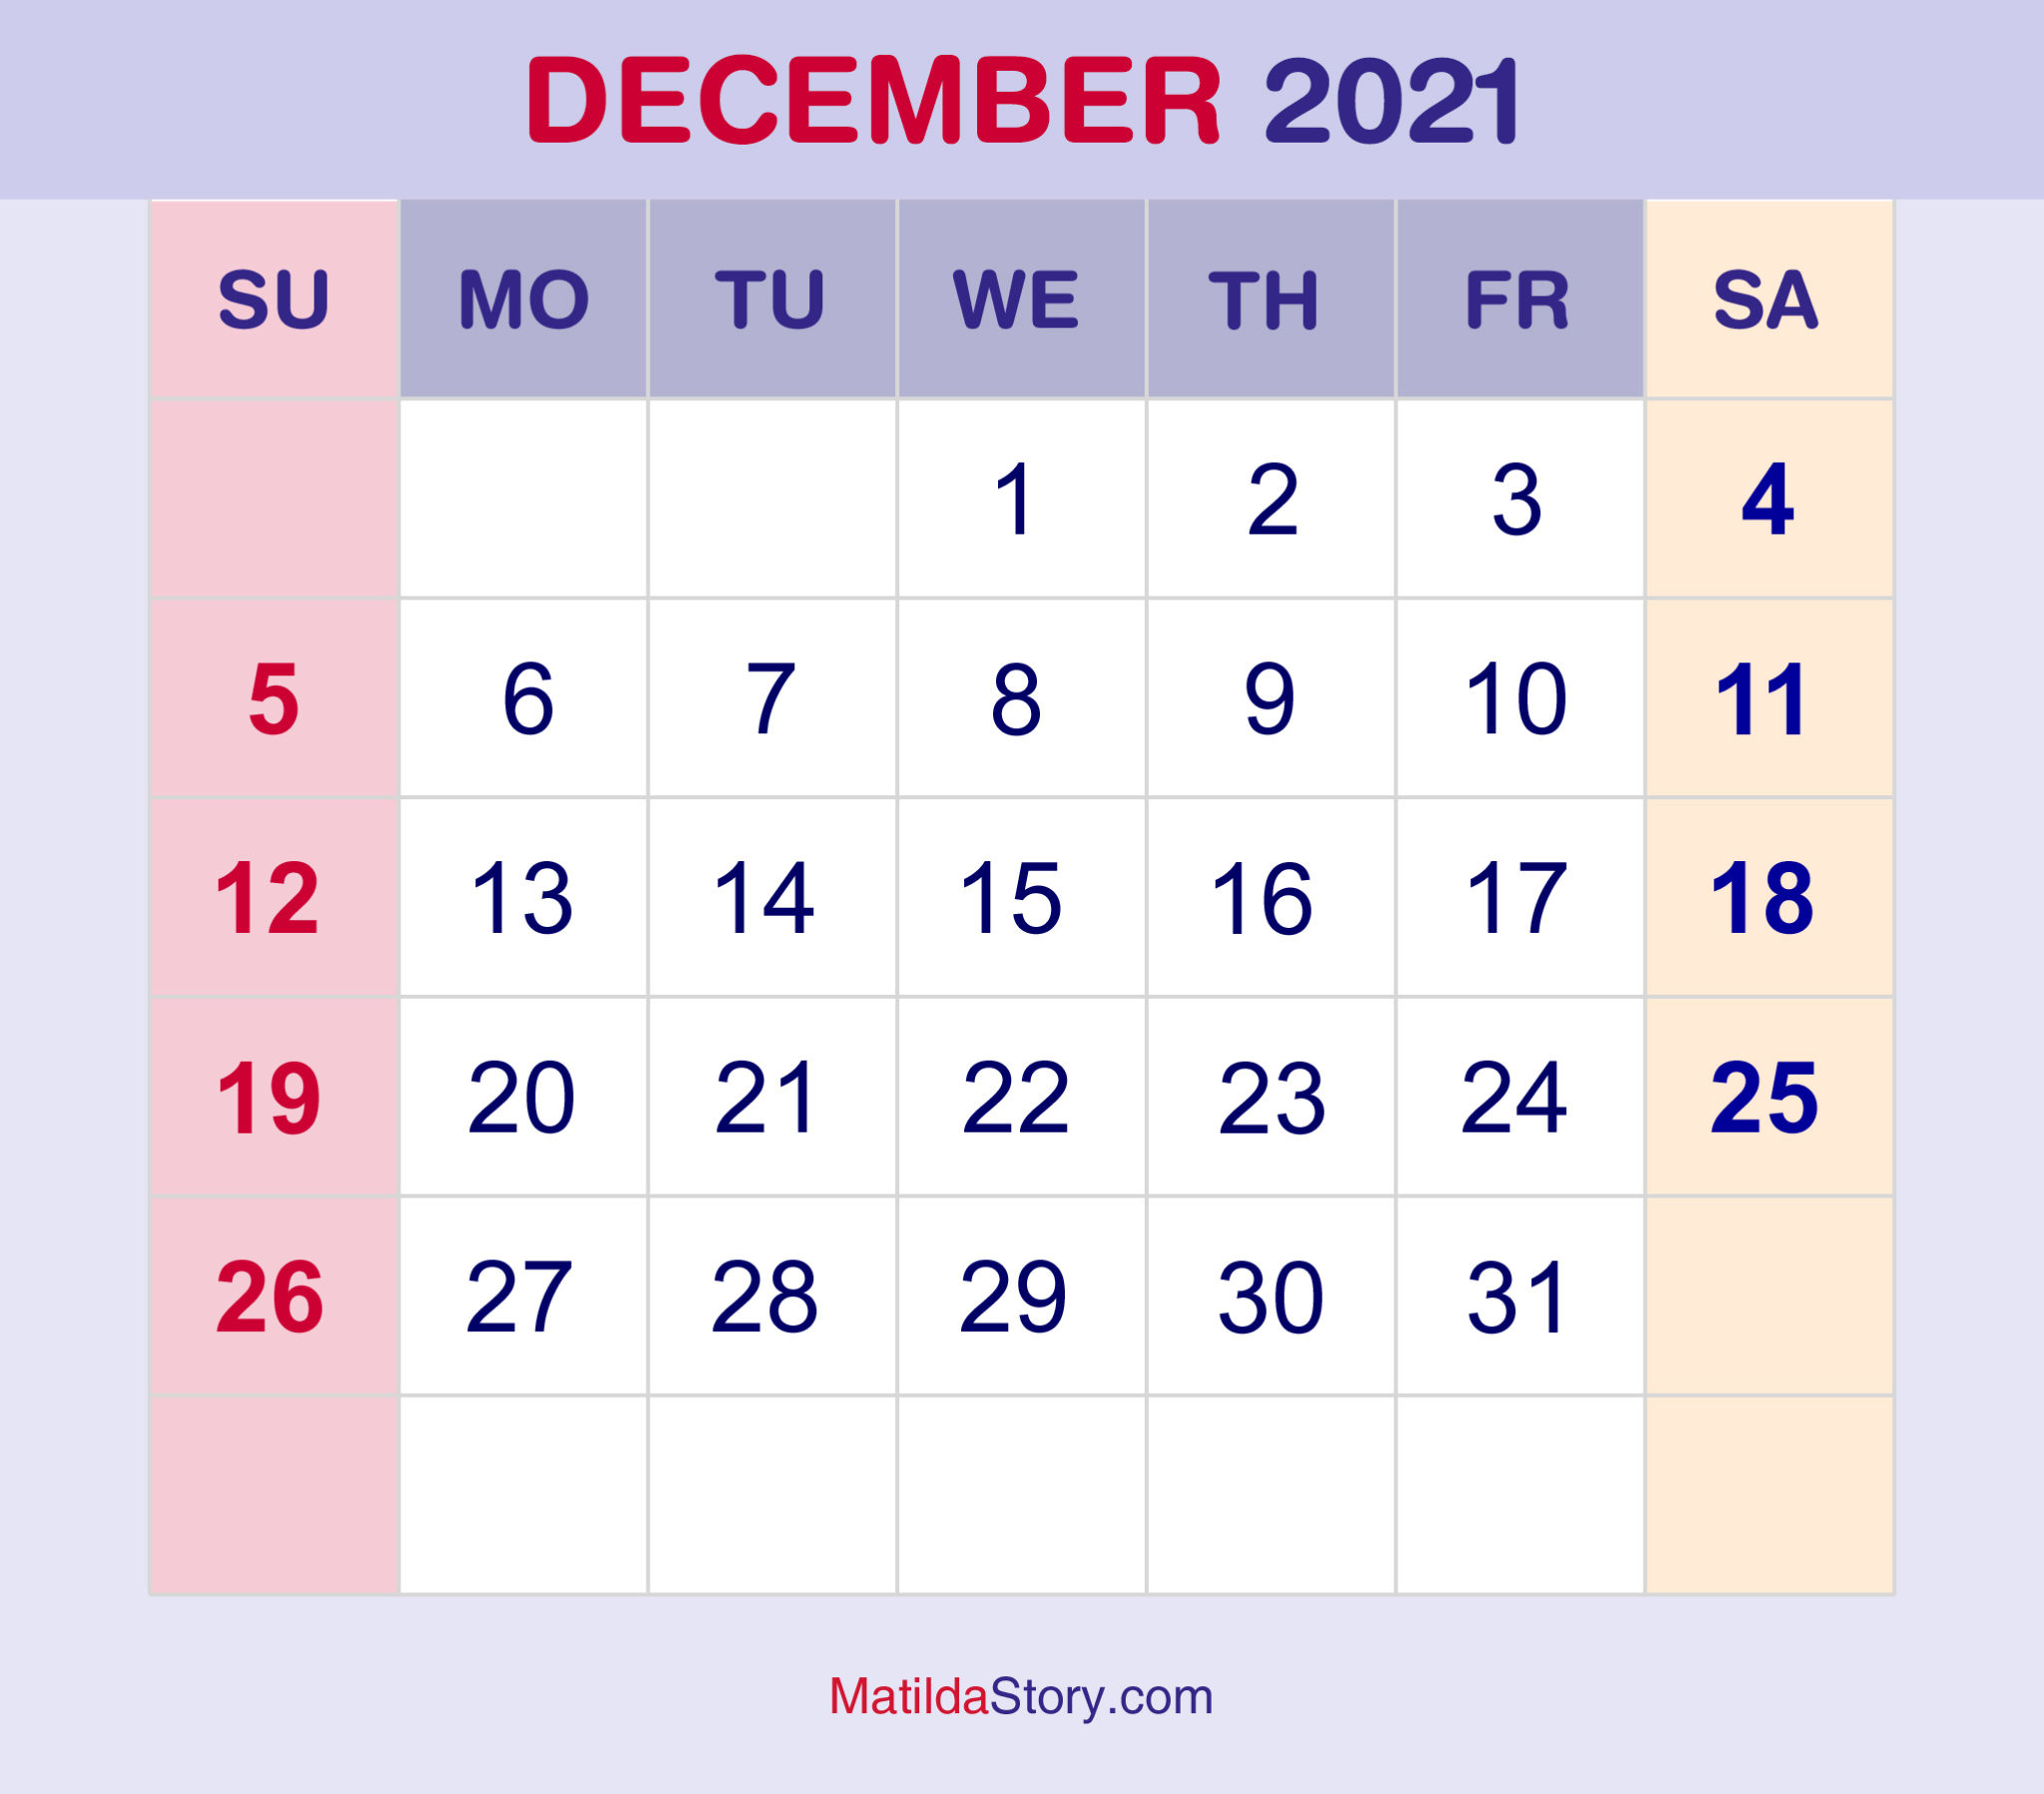 December 2021 Monthly Calendar, Monthly Planner, Printable Free December 2021 Calendar